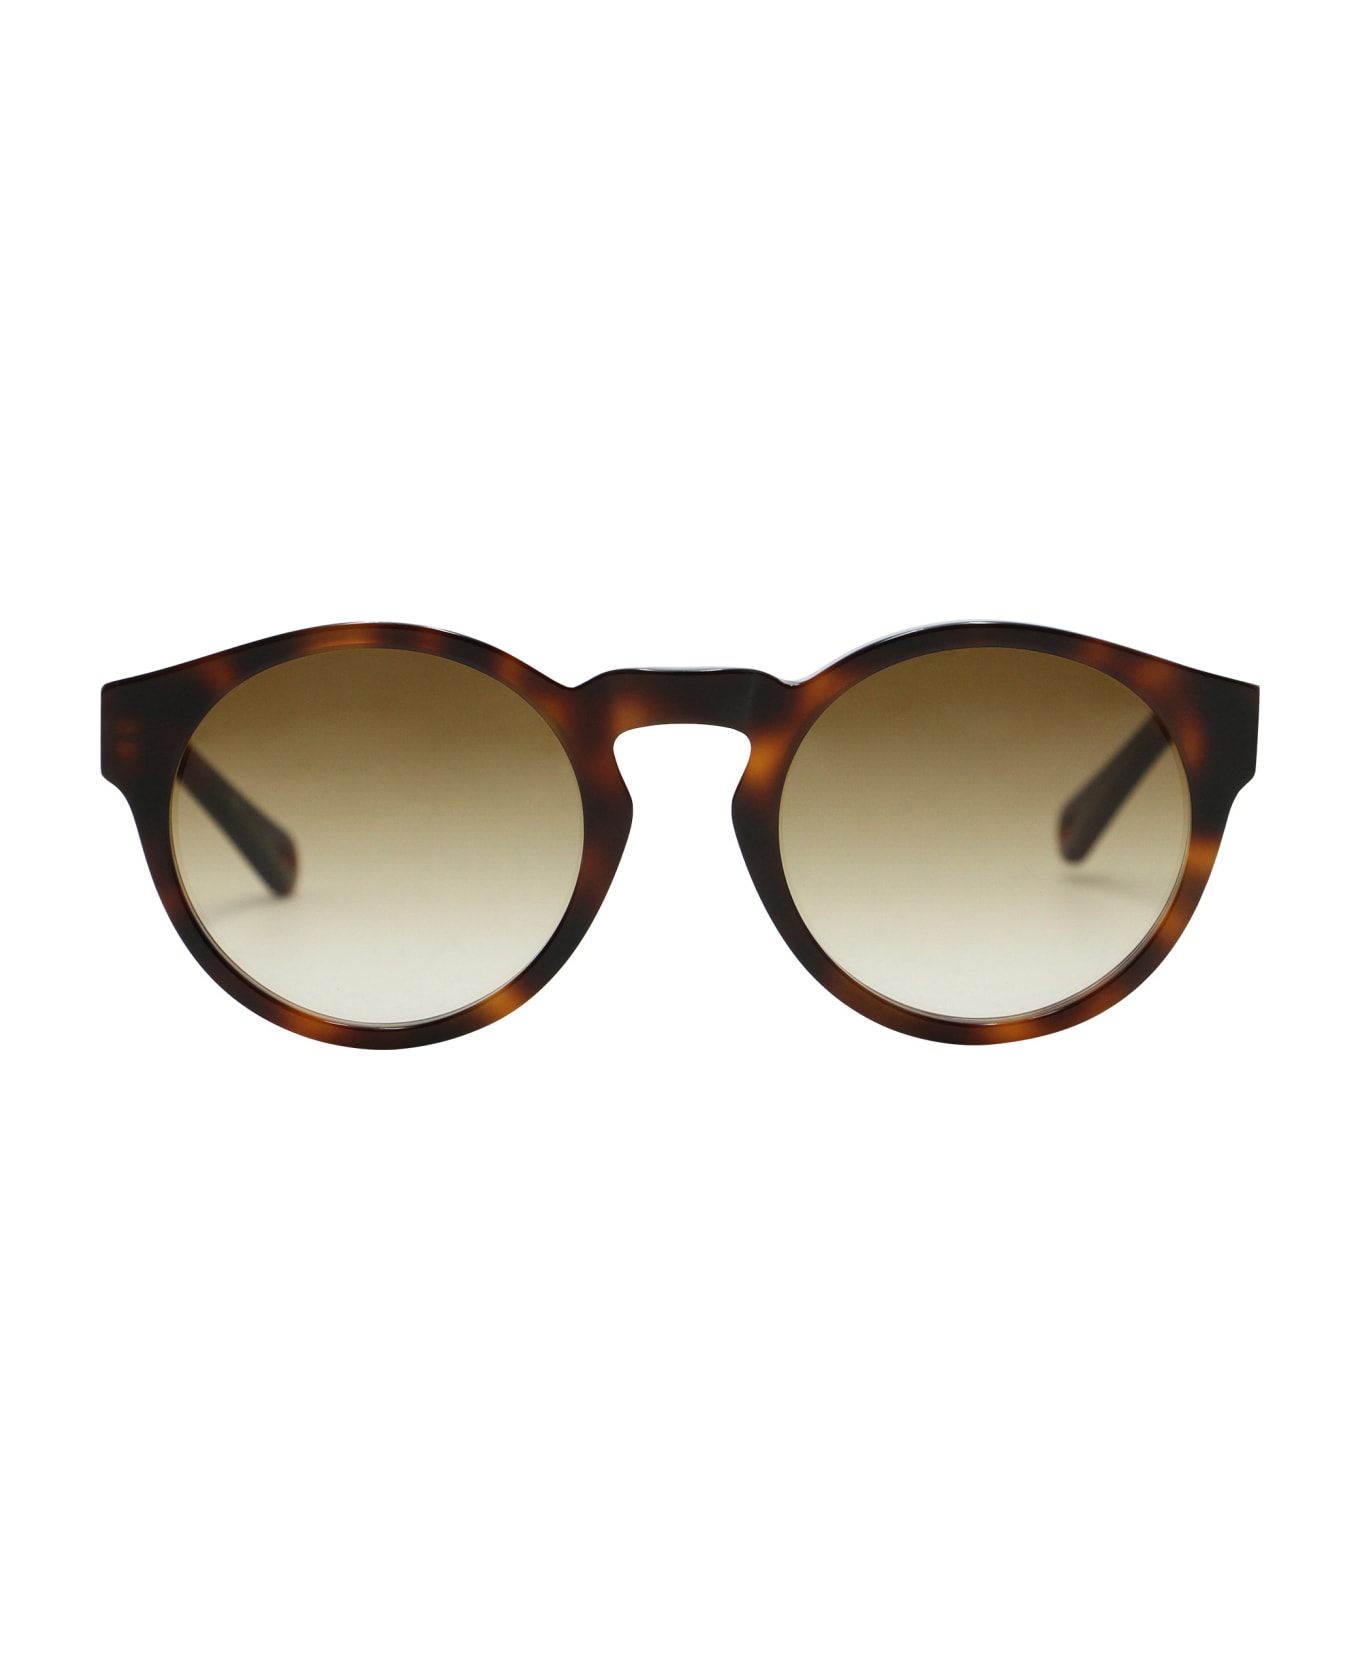 Chloé Round Frame Sunglasses - brown